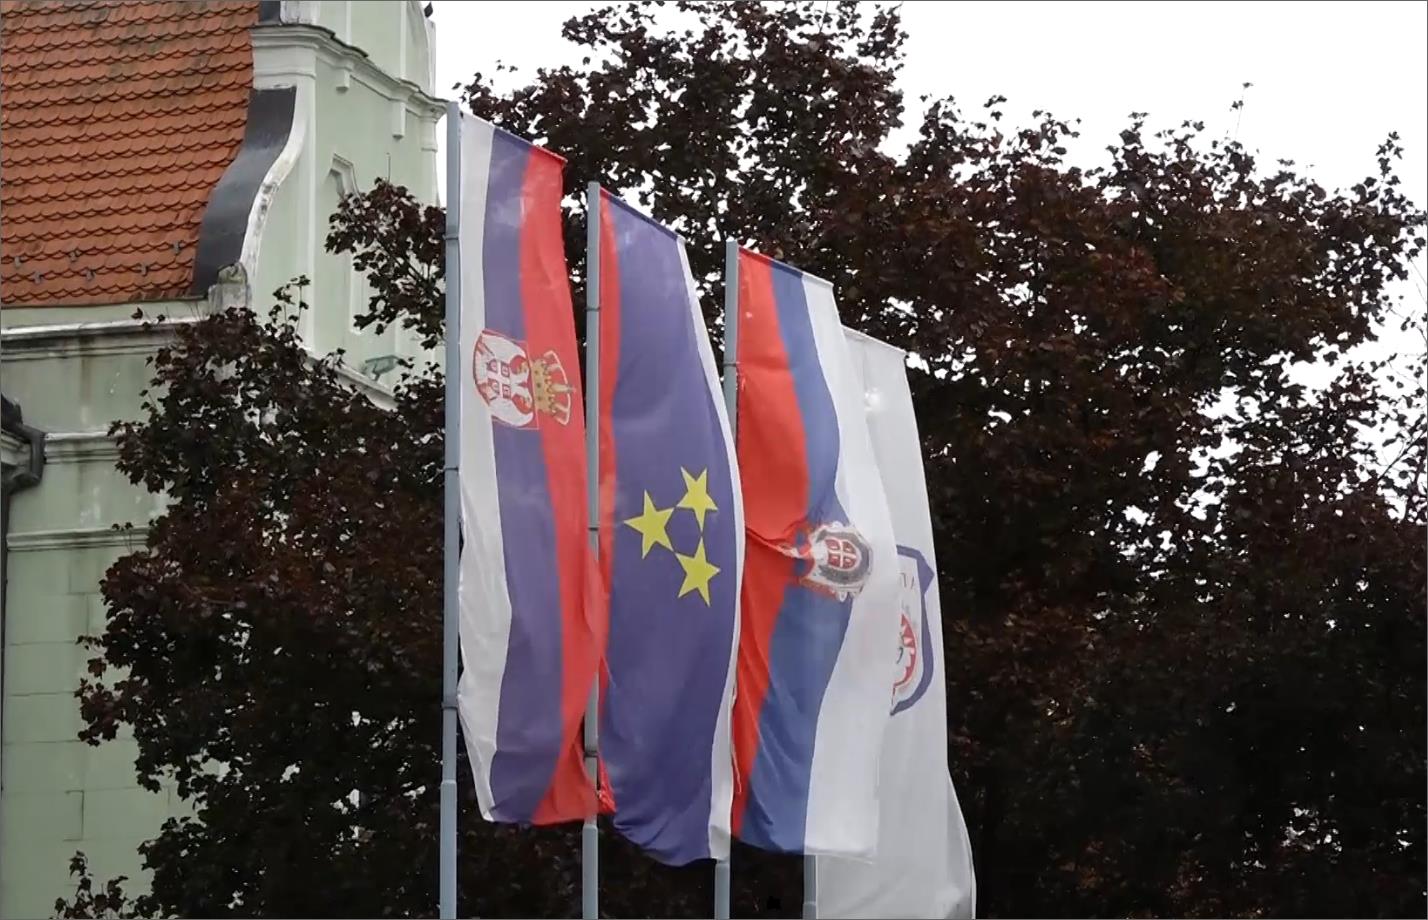 Opstinska zgrada i zastave